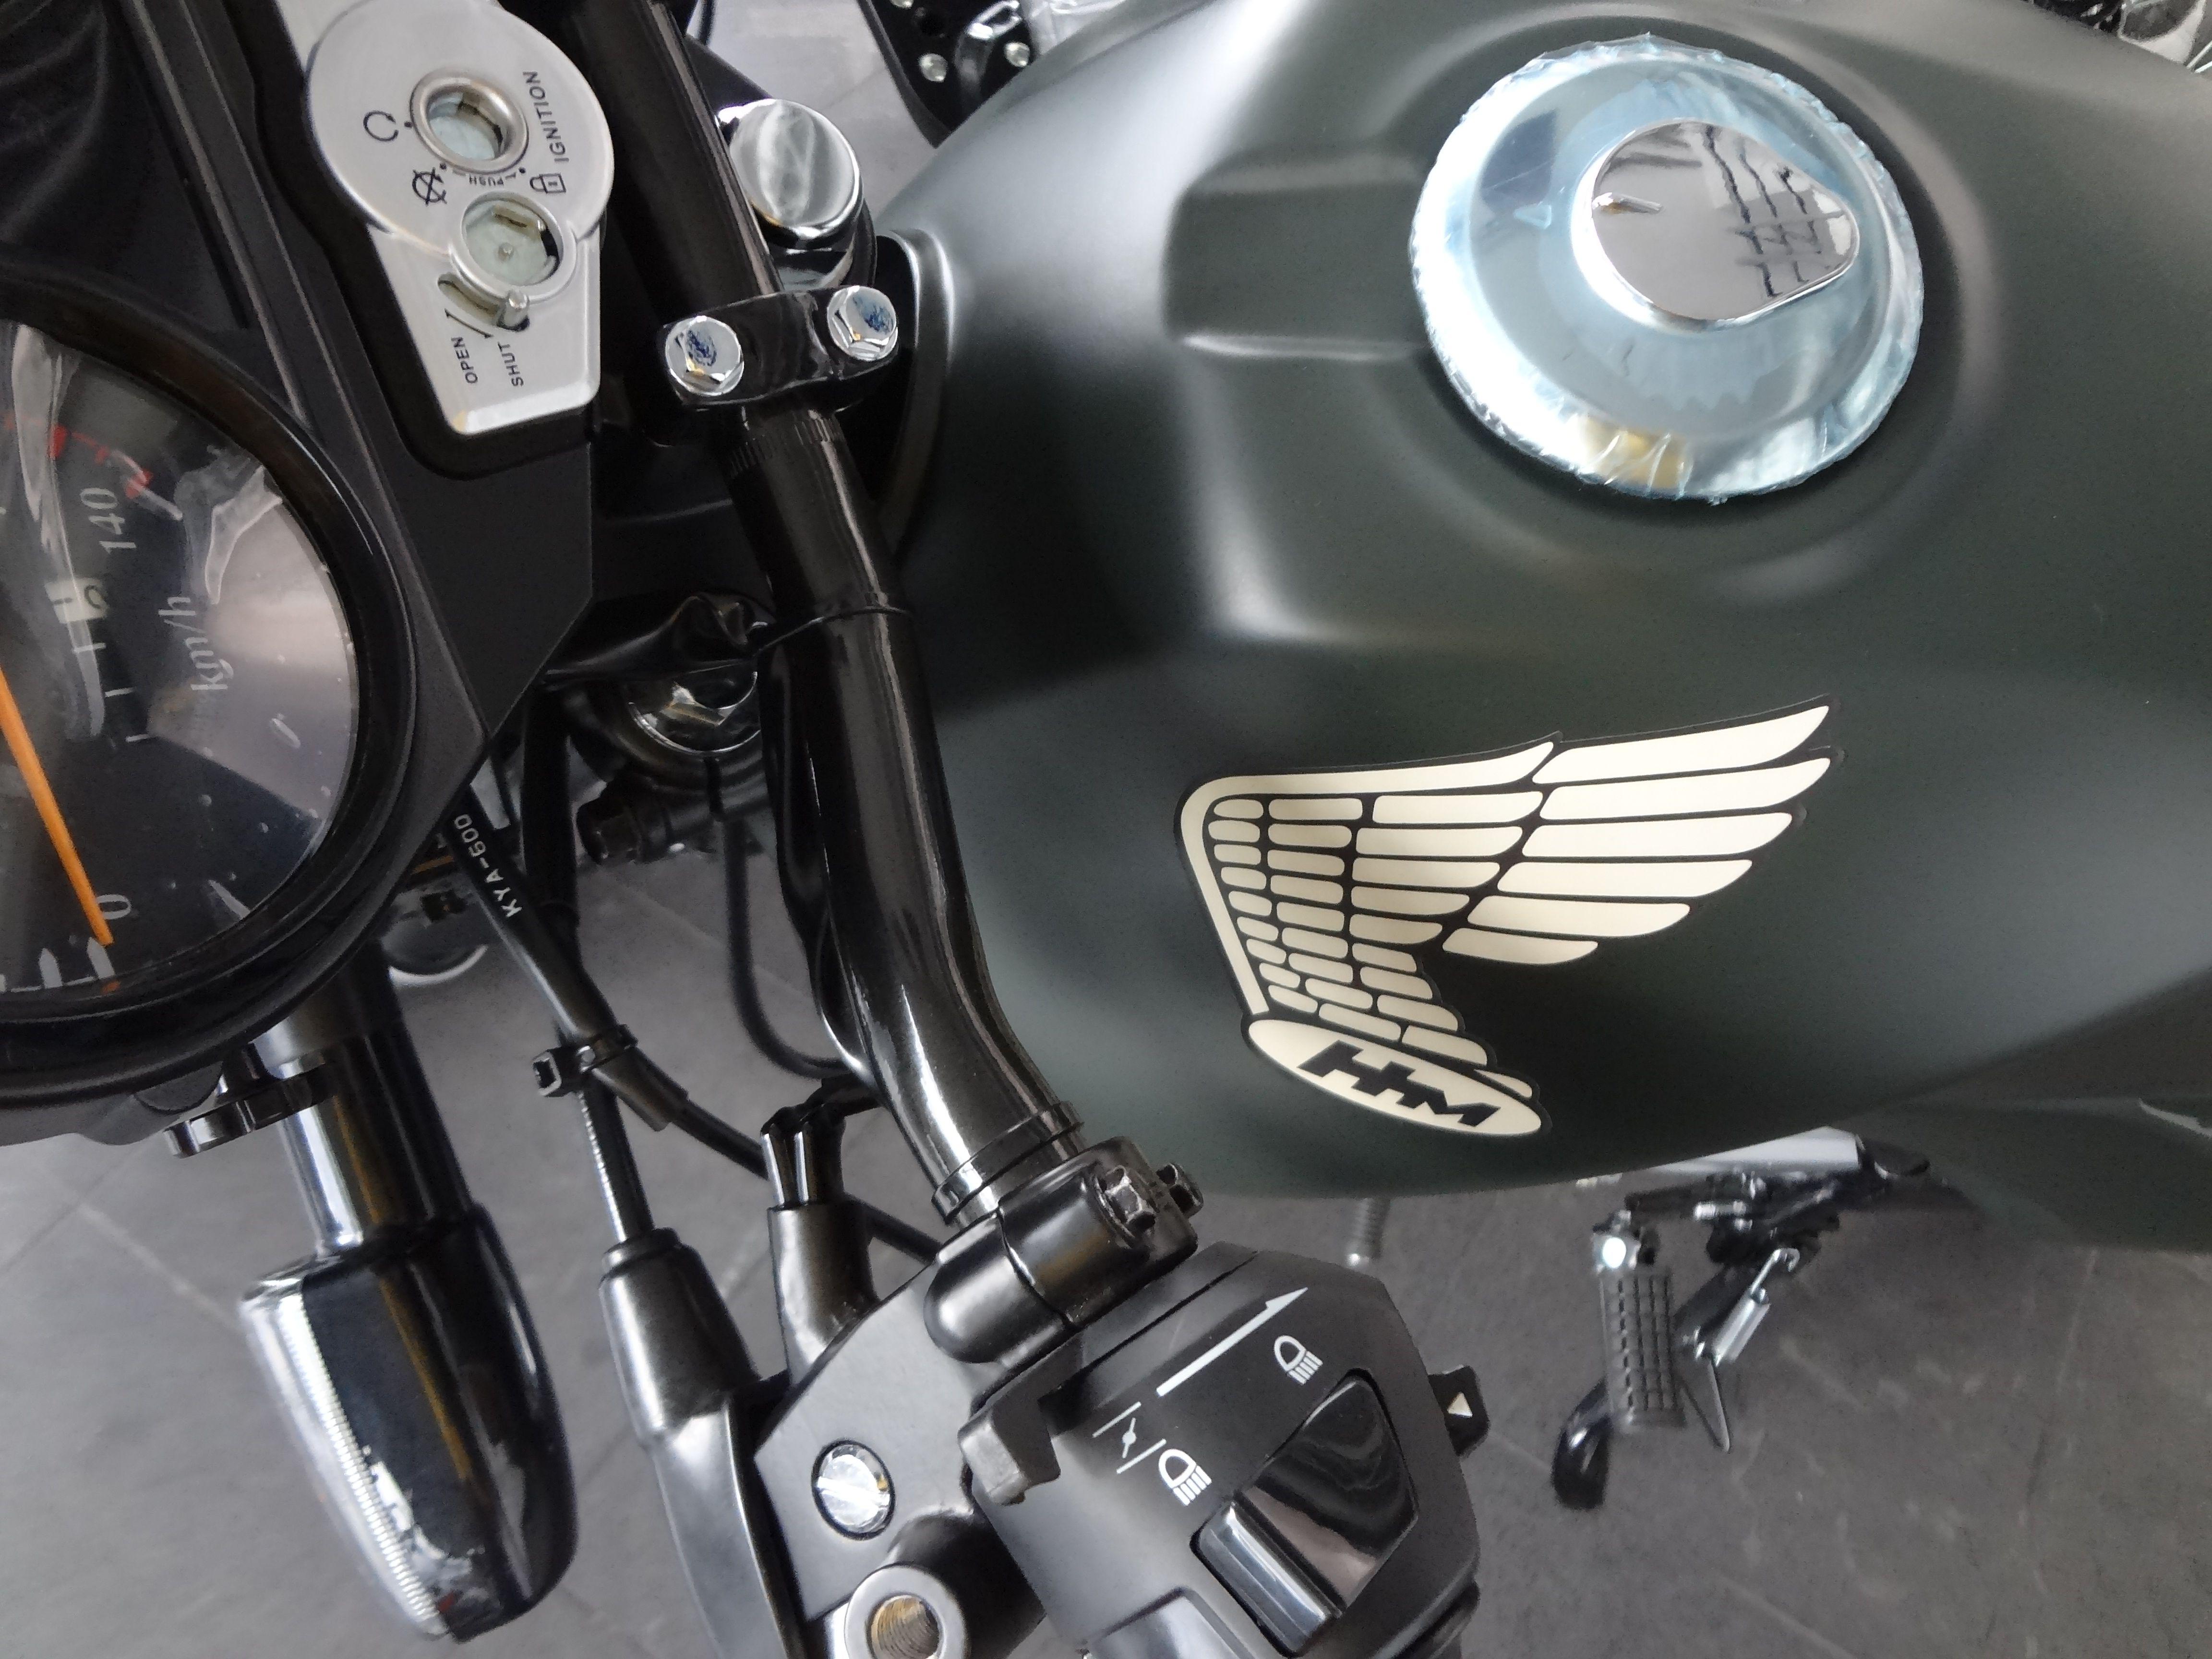 Vintage Honda Motorcycle Logo - File:Honda, brand new vintage style motorcycle, (gas tank logo pic ...